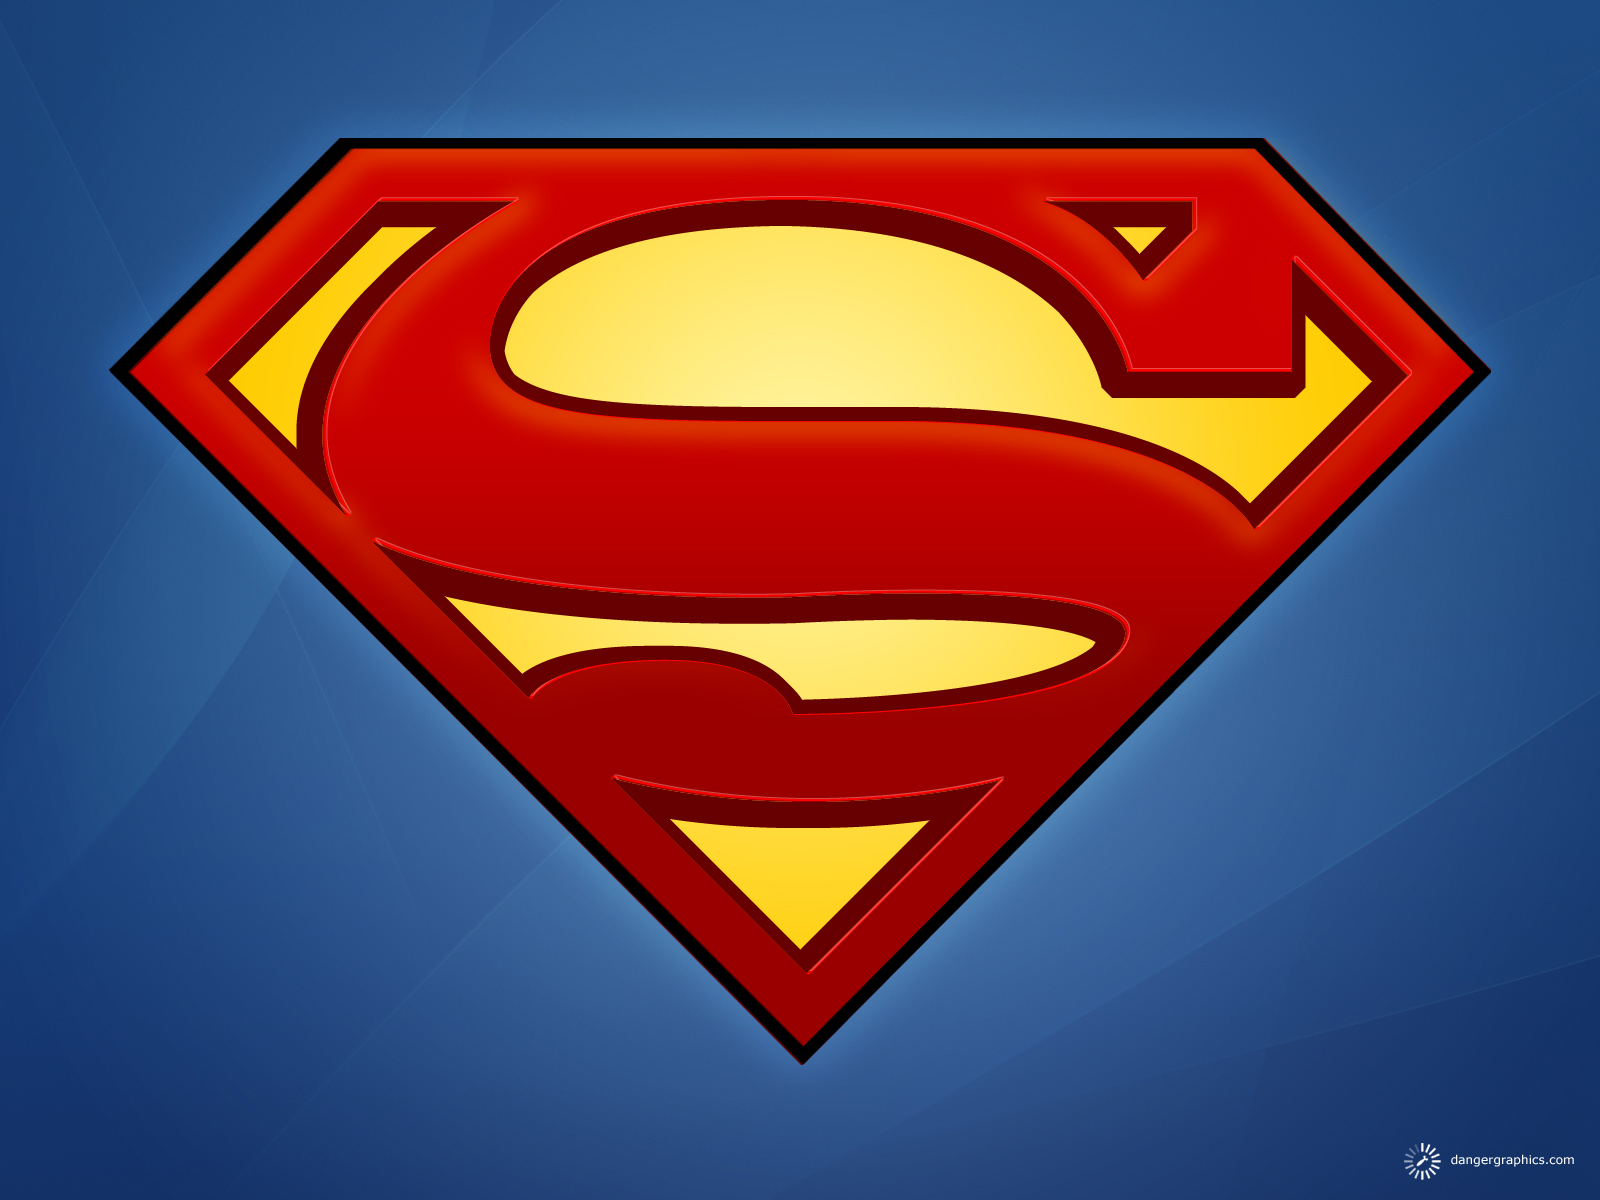 Superman Logo Wallpaper HDq Image